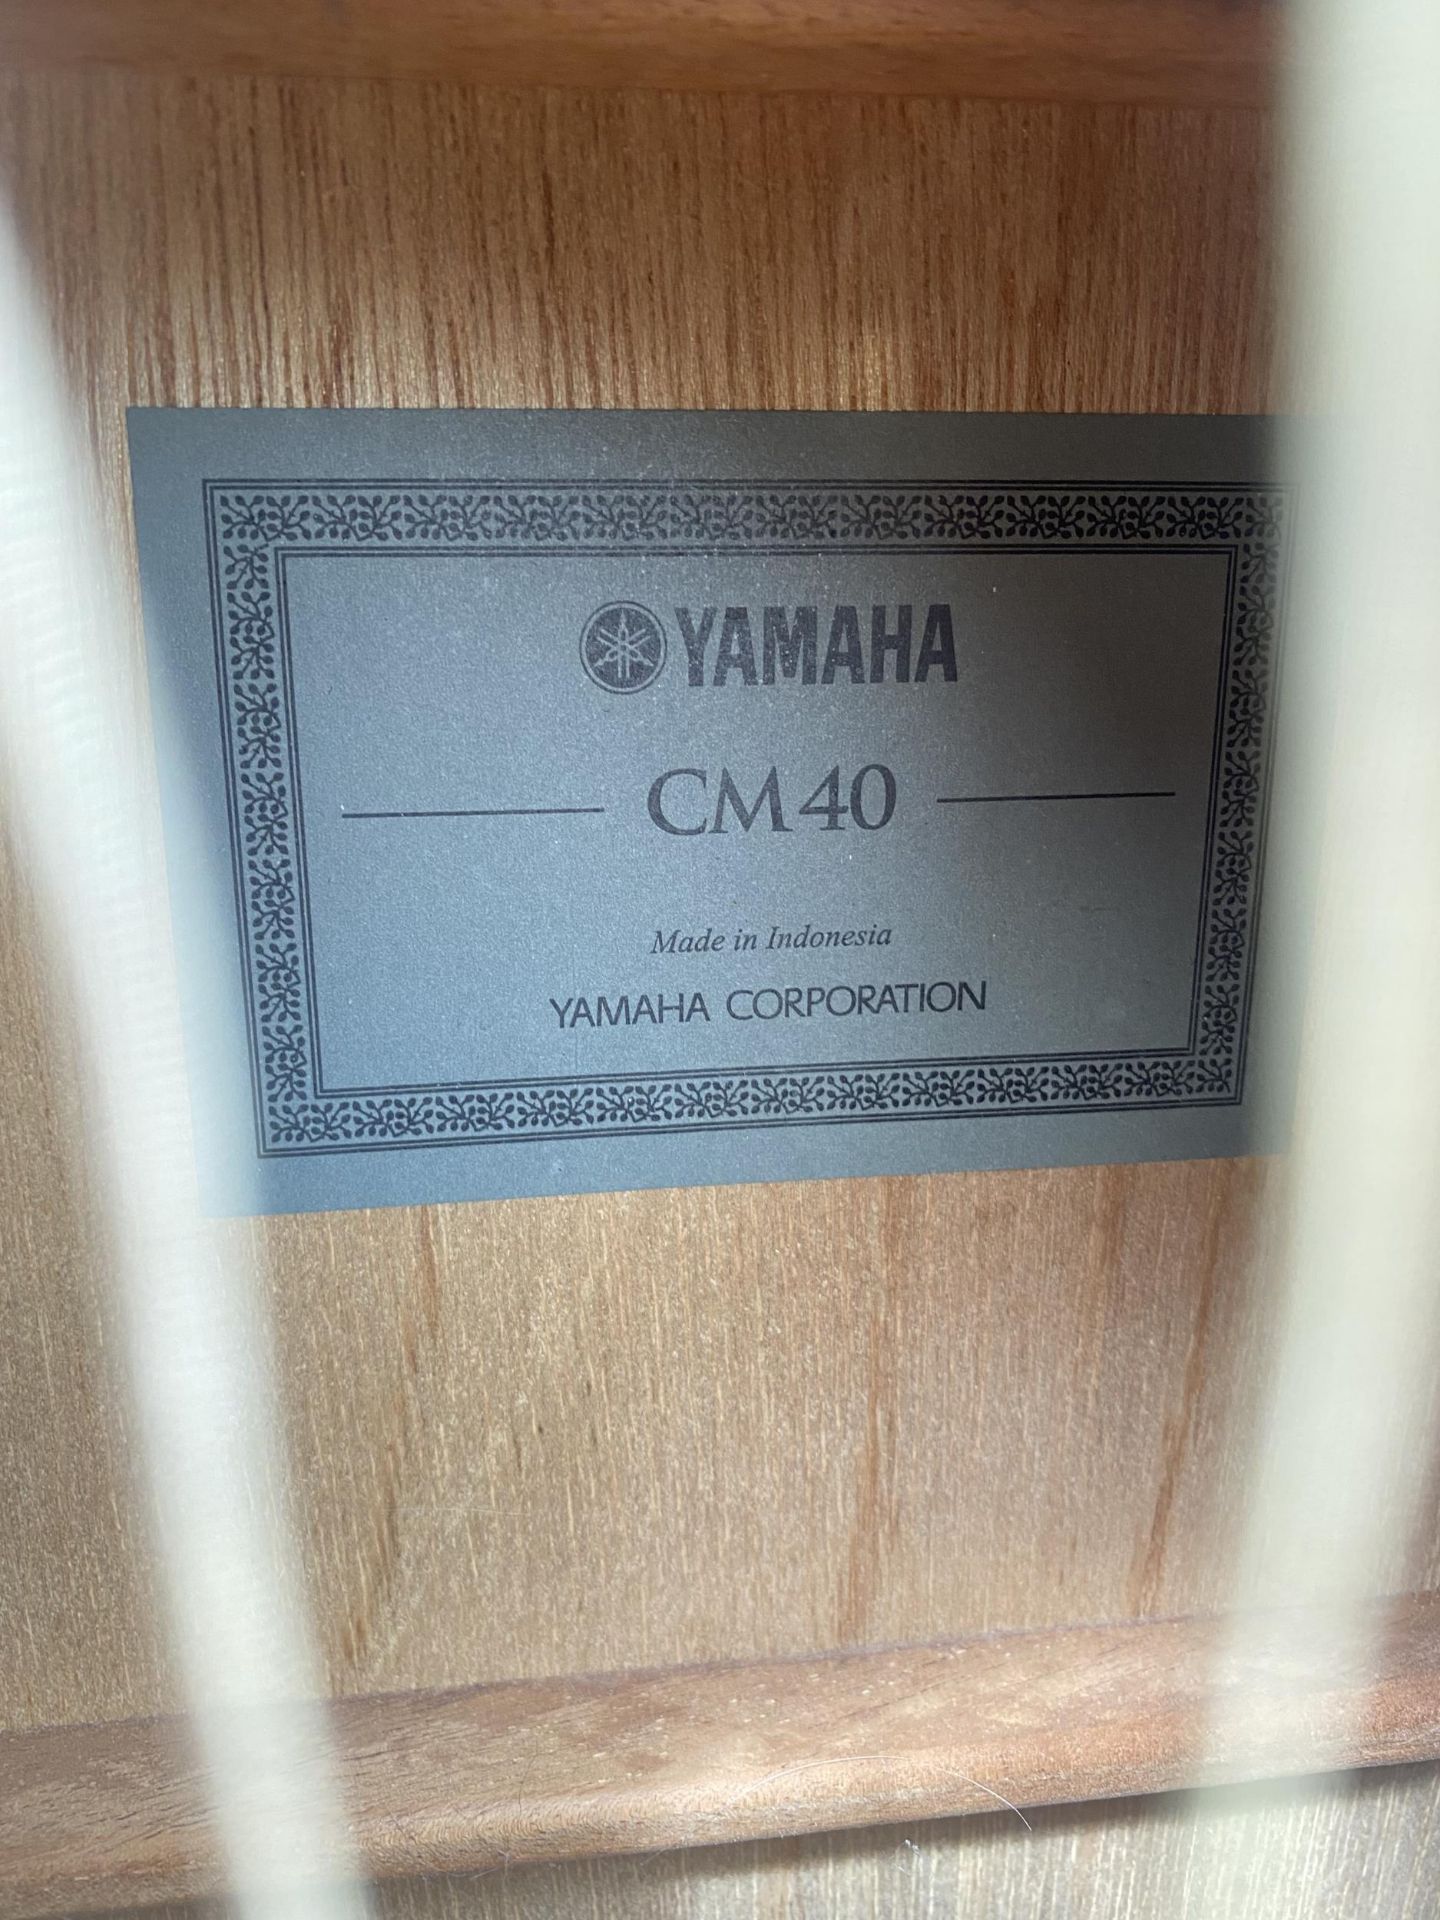 A YAMAHA CM40 ACOUSTIC GUITAR - Image 3 of 3